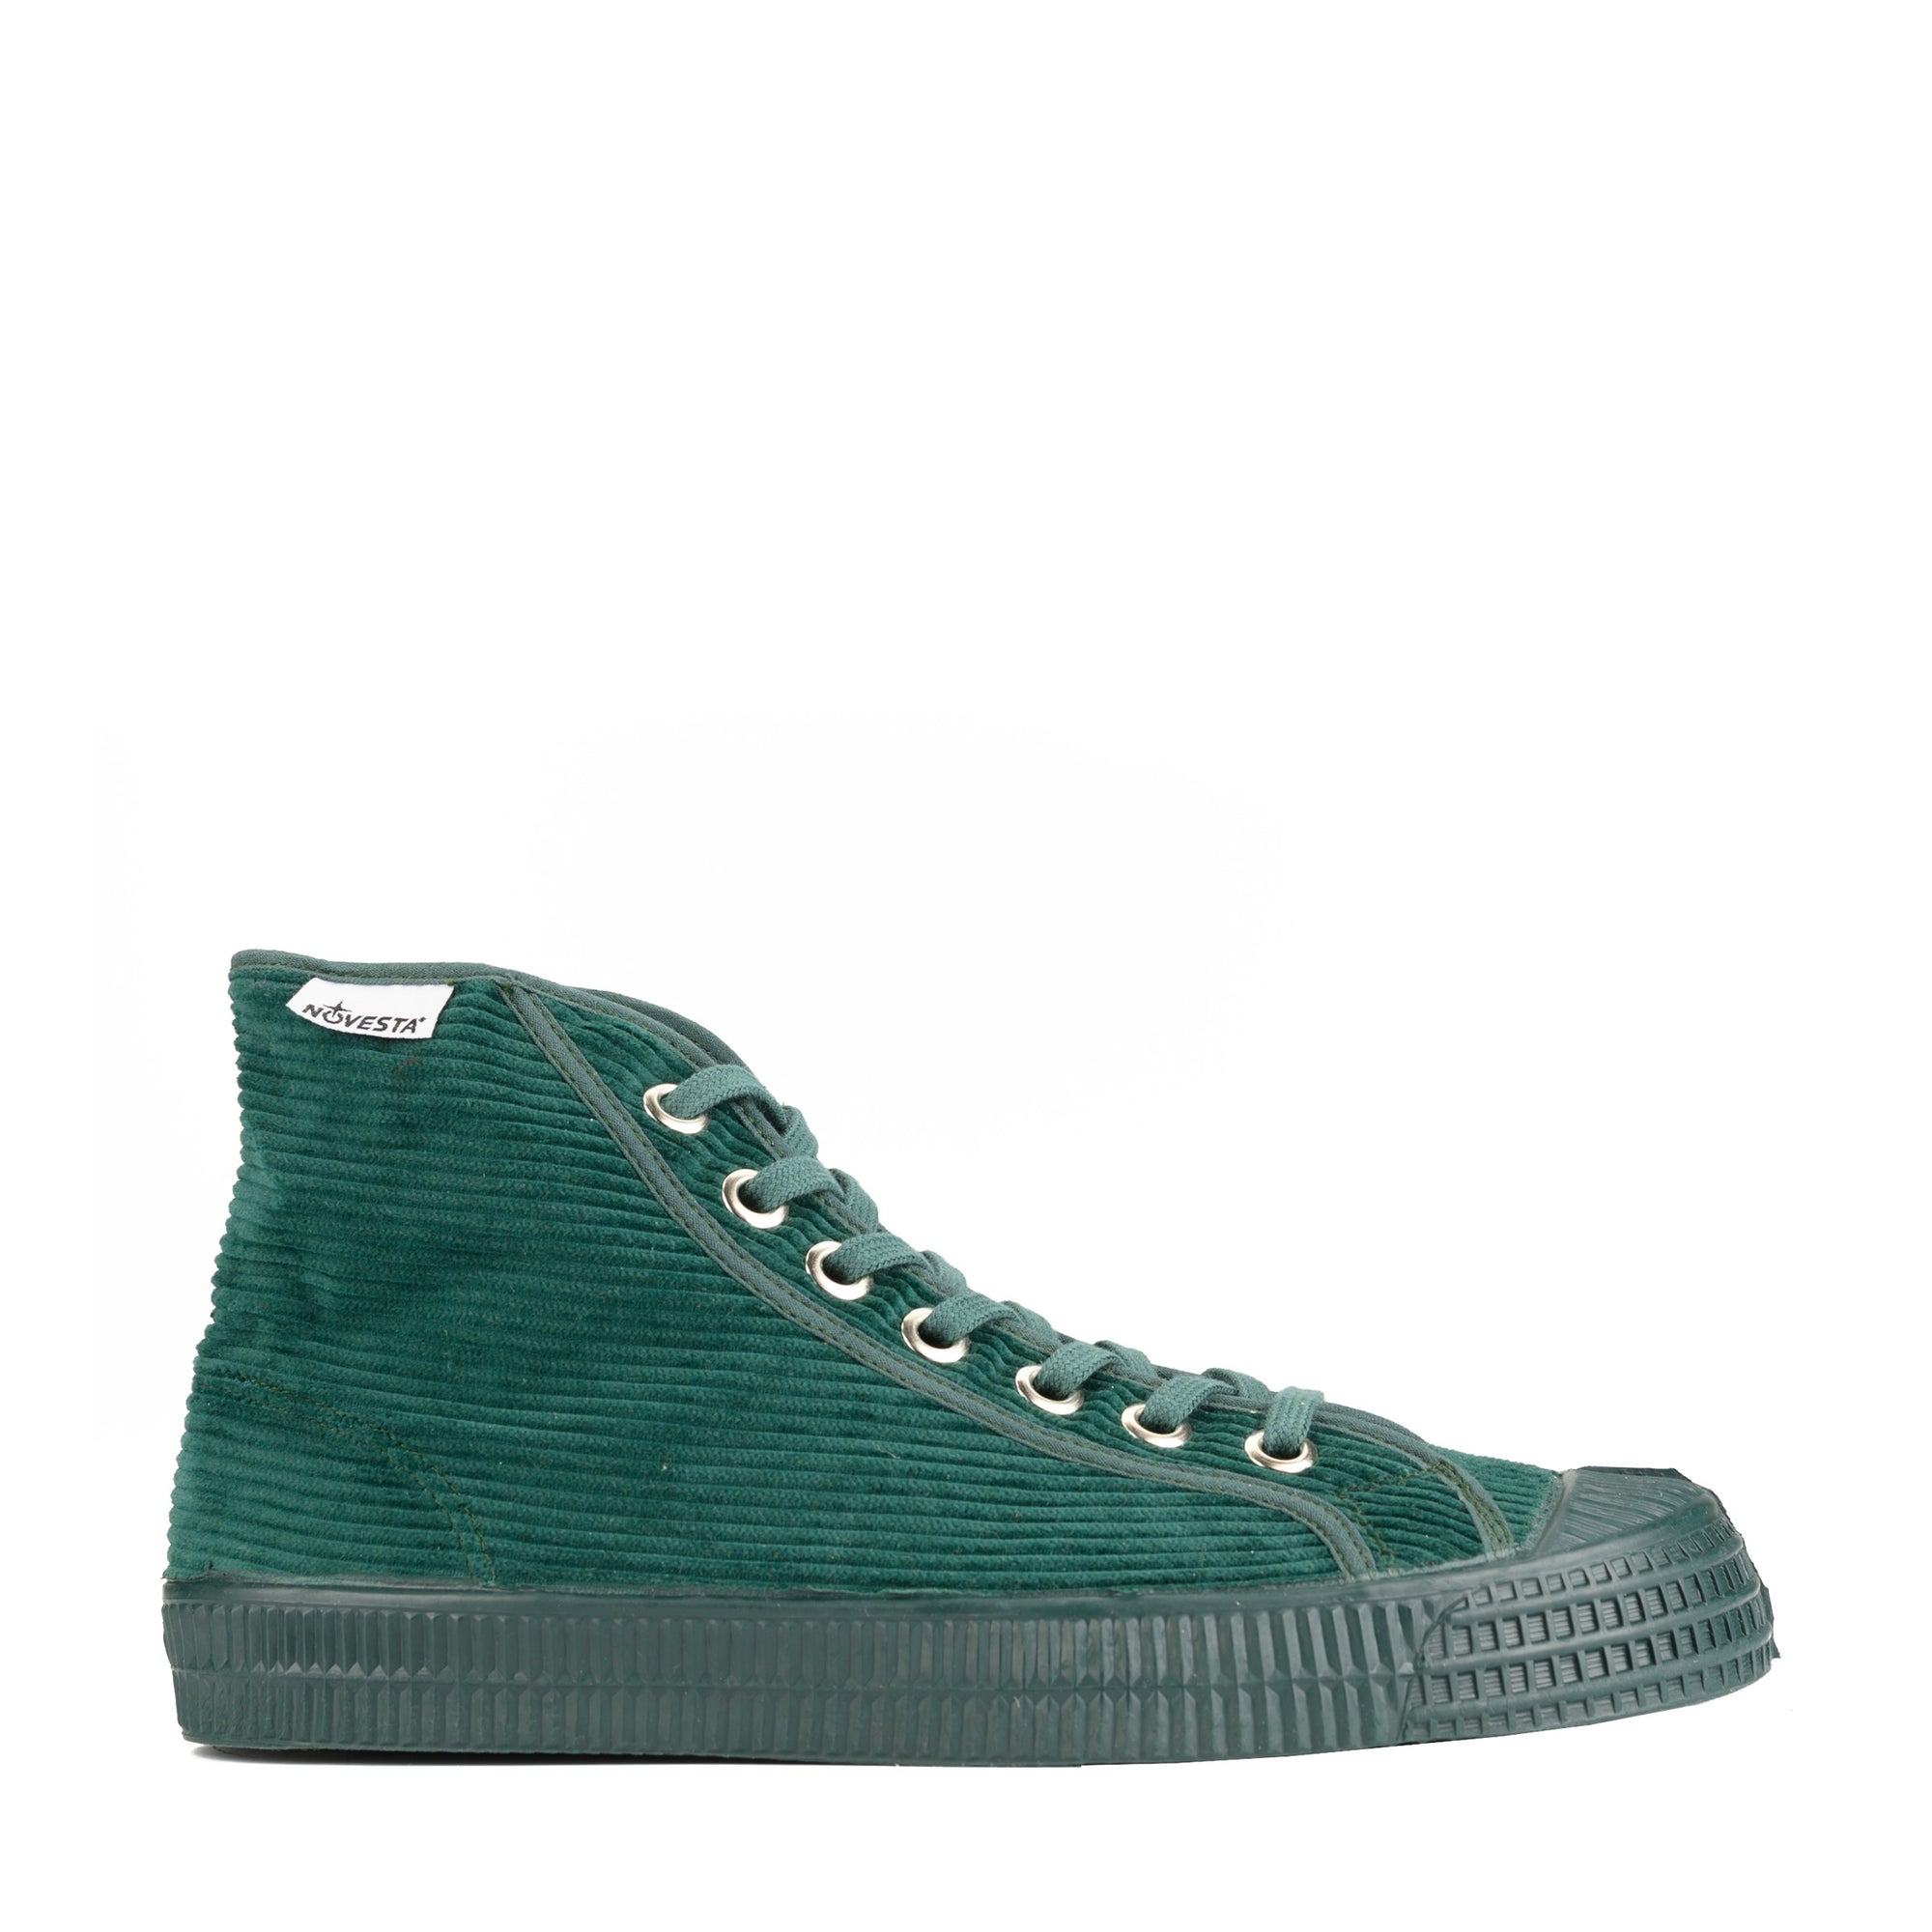 Cord mono Green sneaker - Novesta